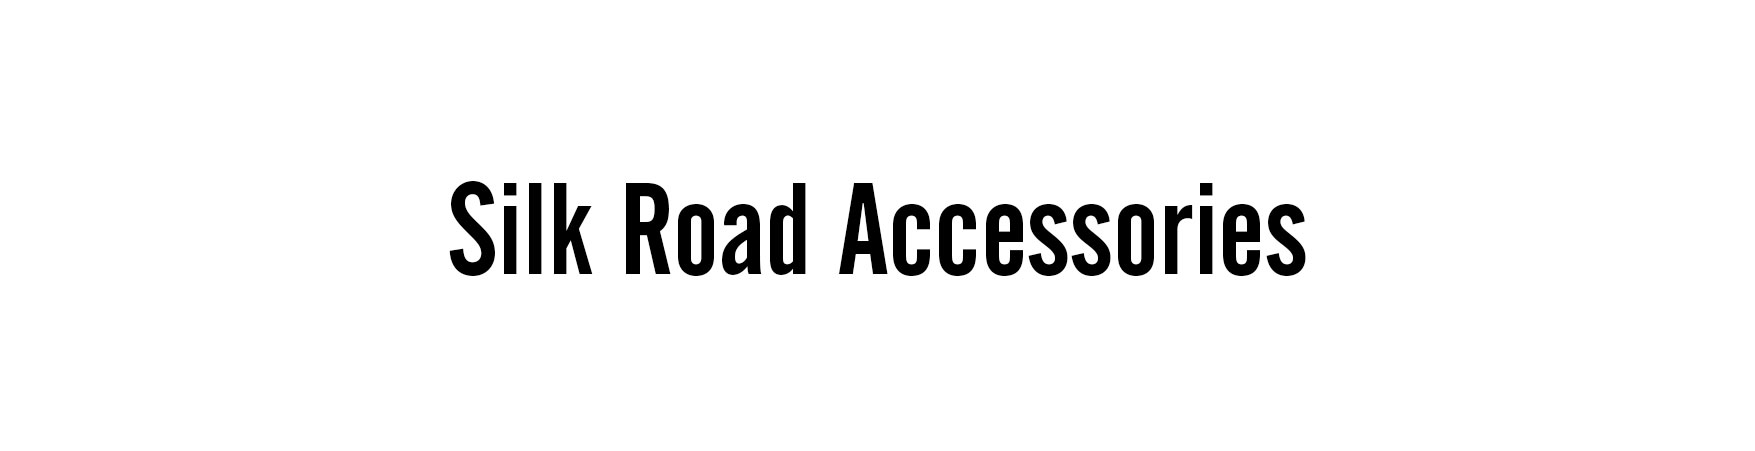 Silk Road Accessories